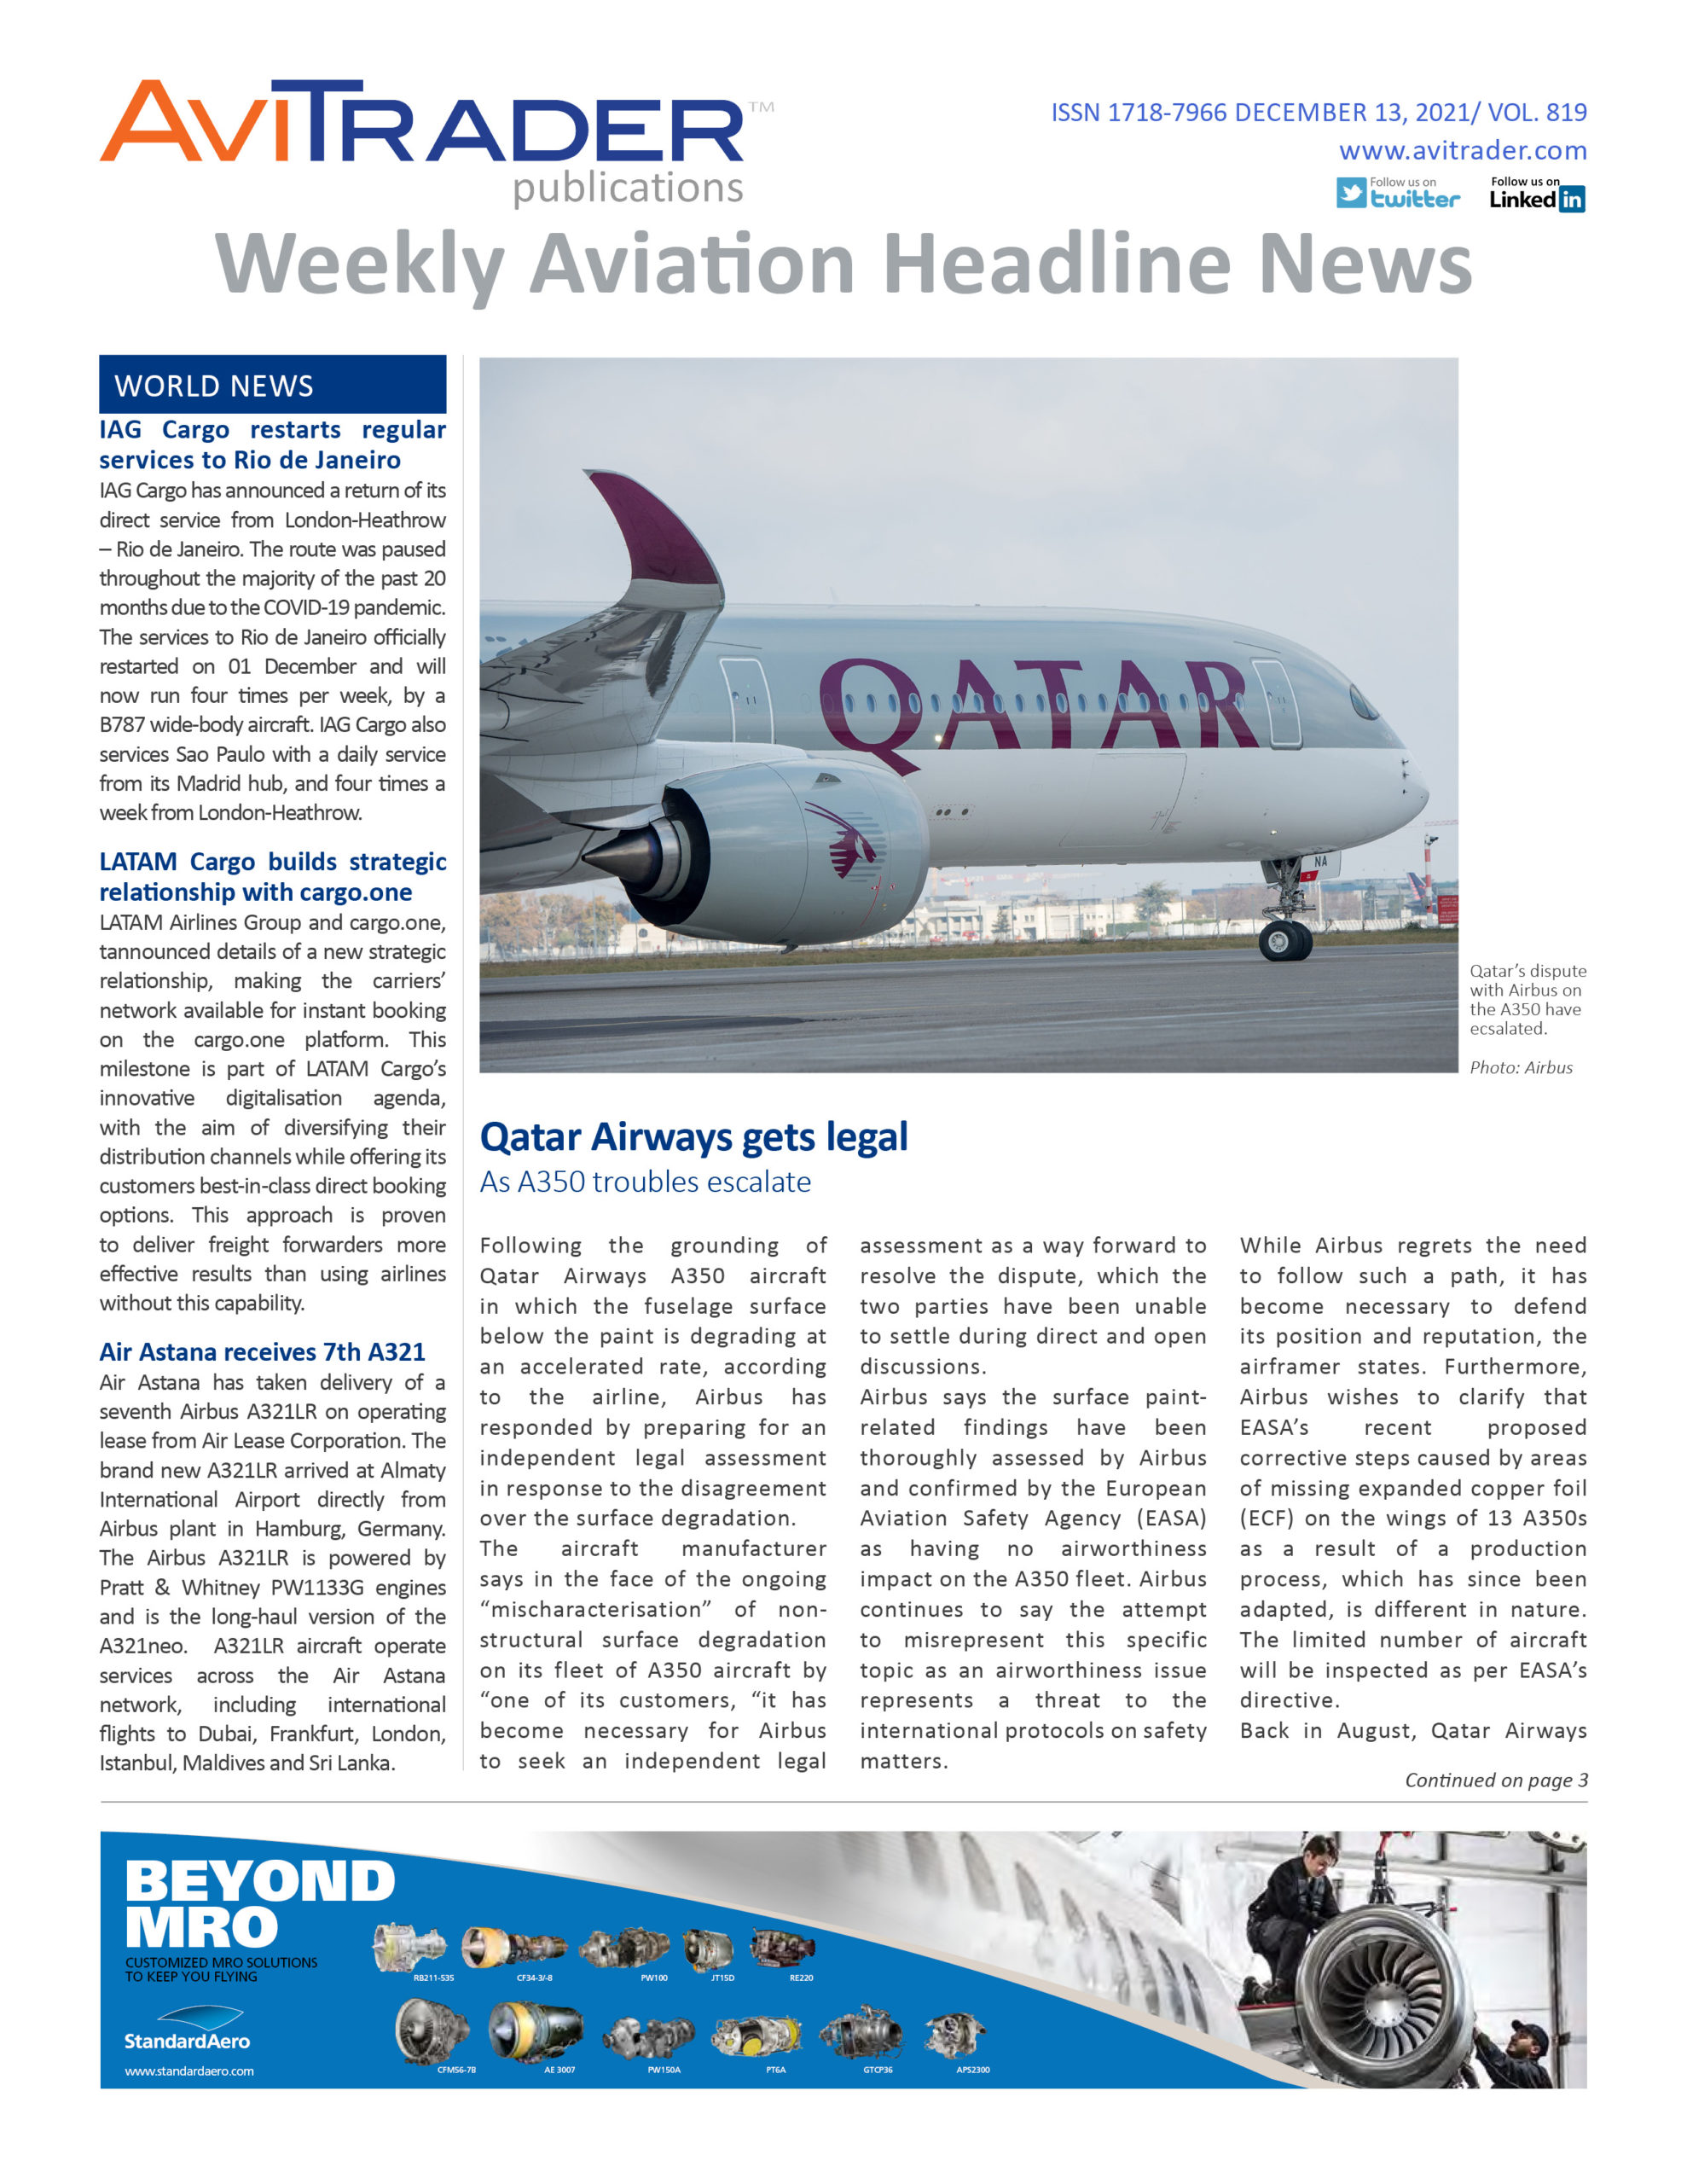 AviTrader_Weekly_Headline_News_Cover_2021-12-13